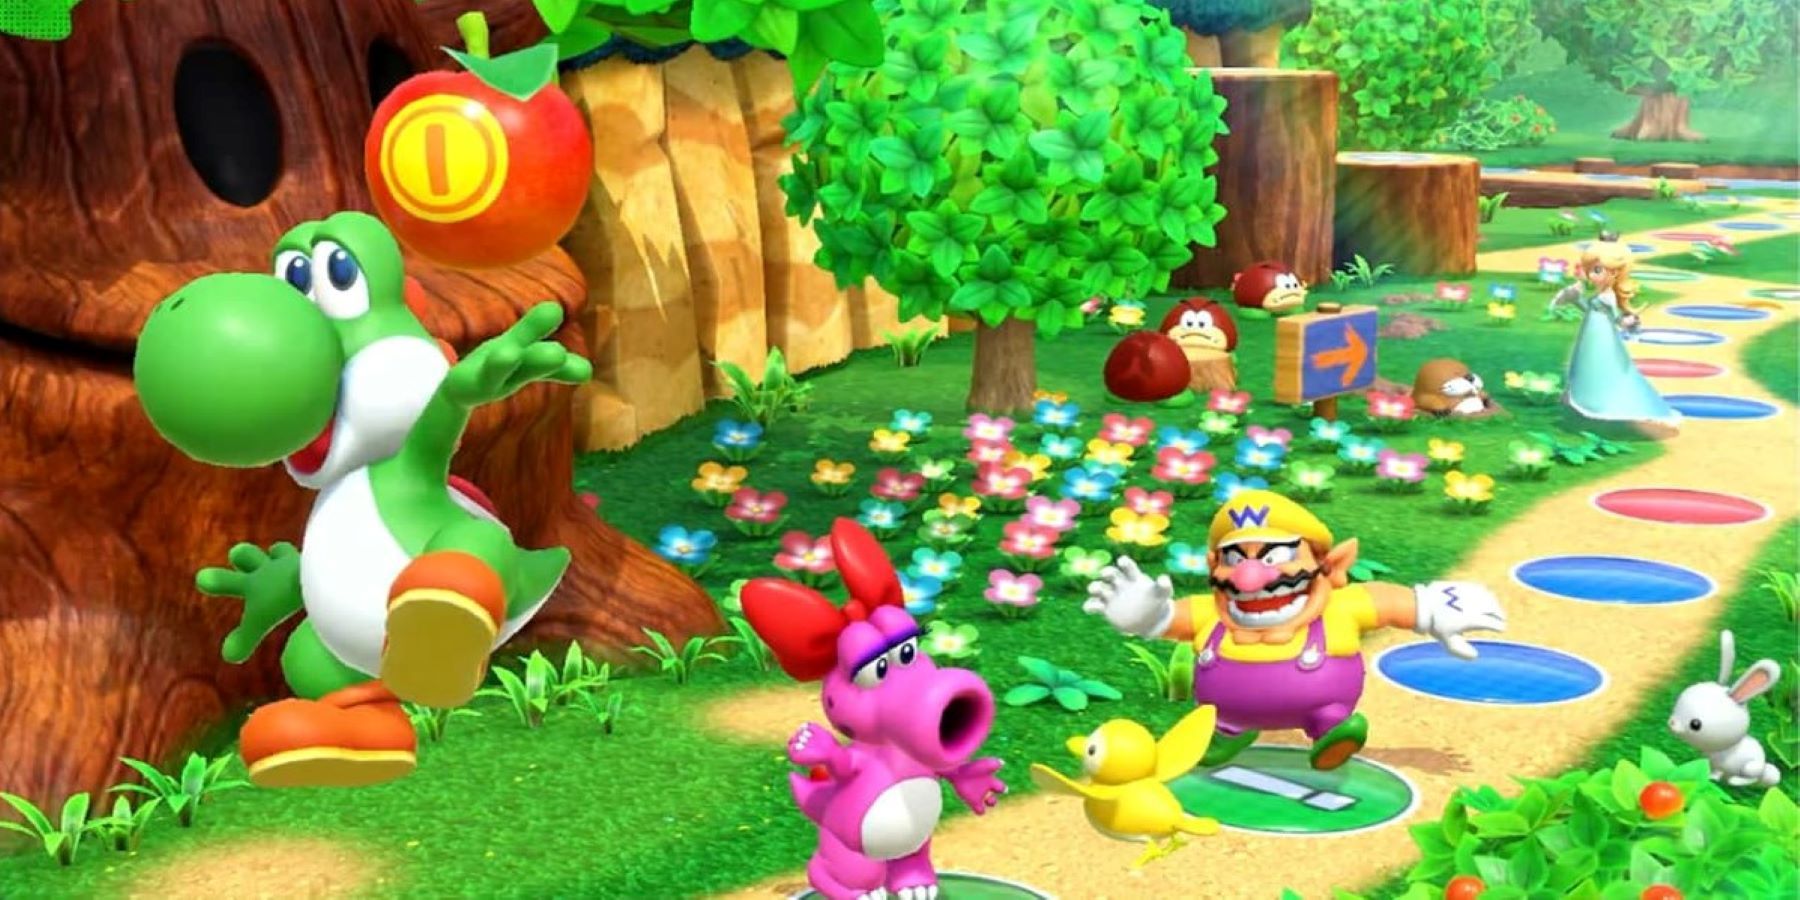 Yoshi, Birdo, Wario, and Rosalina exploring the Woody Woods board in Mario Party Superstars